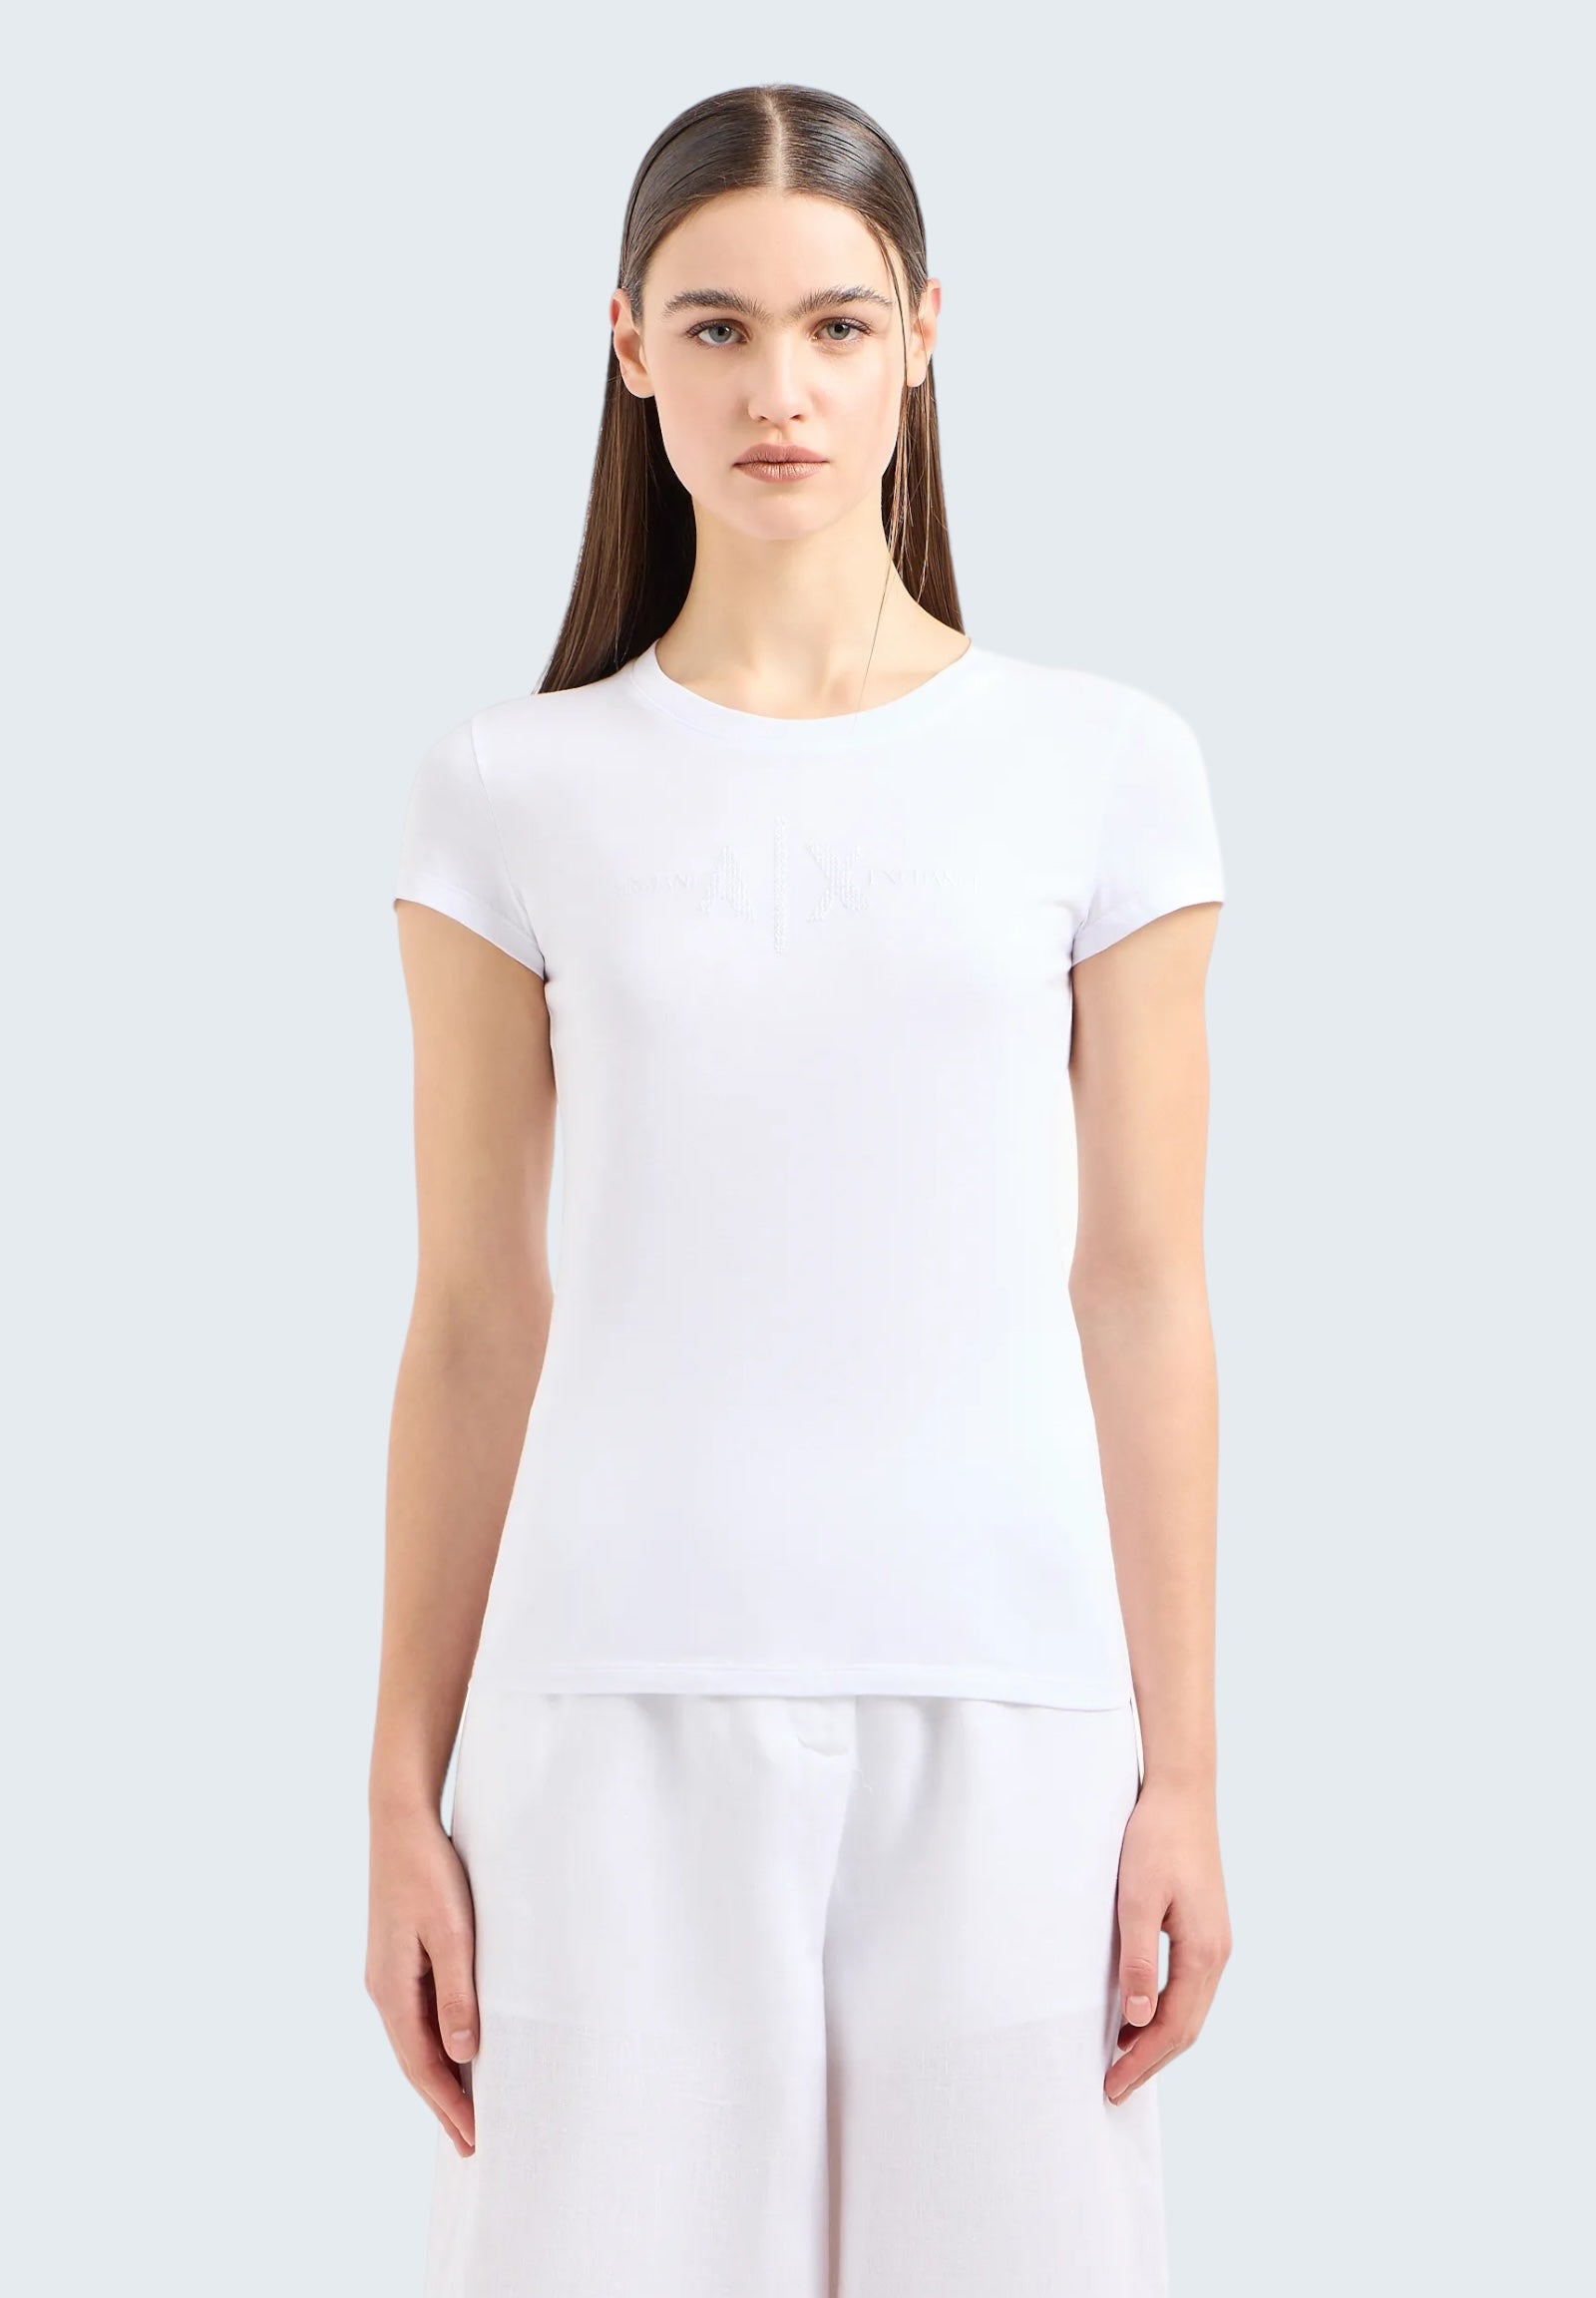 3dyt58 Optic White T-Shirt